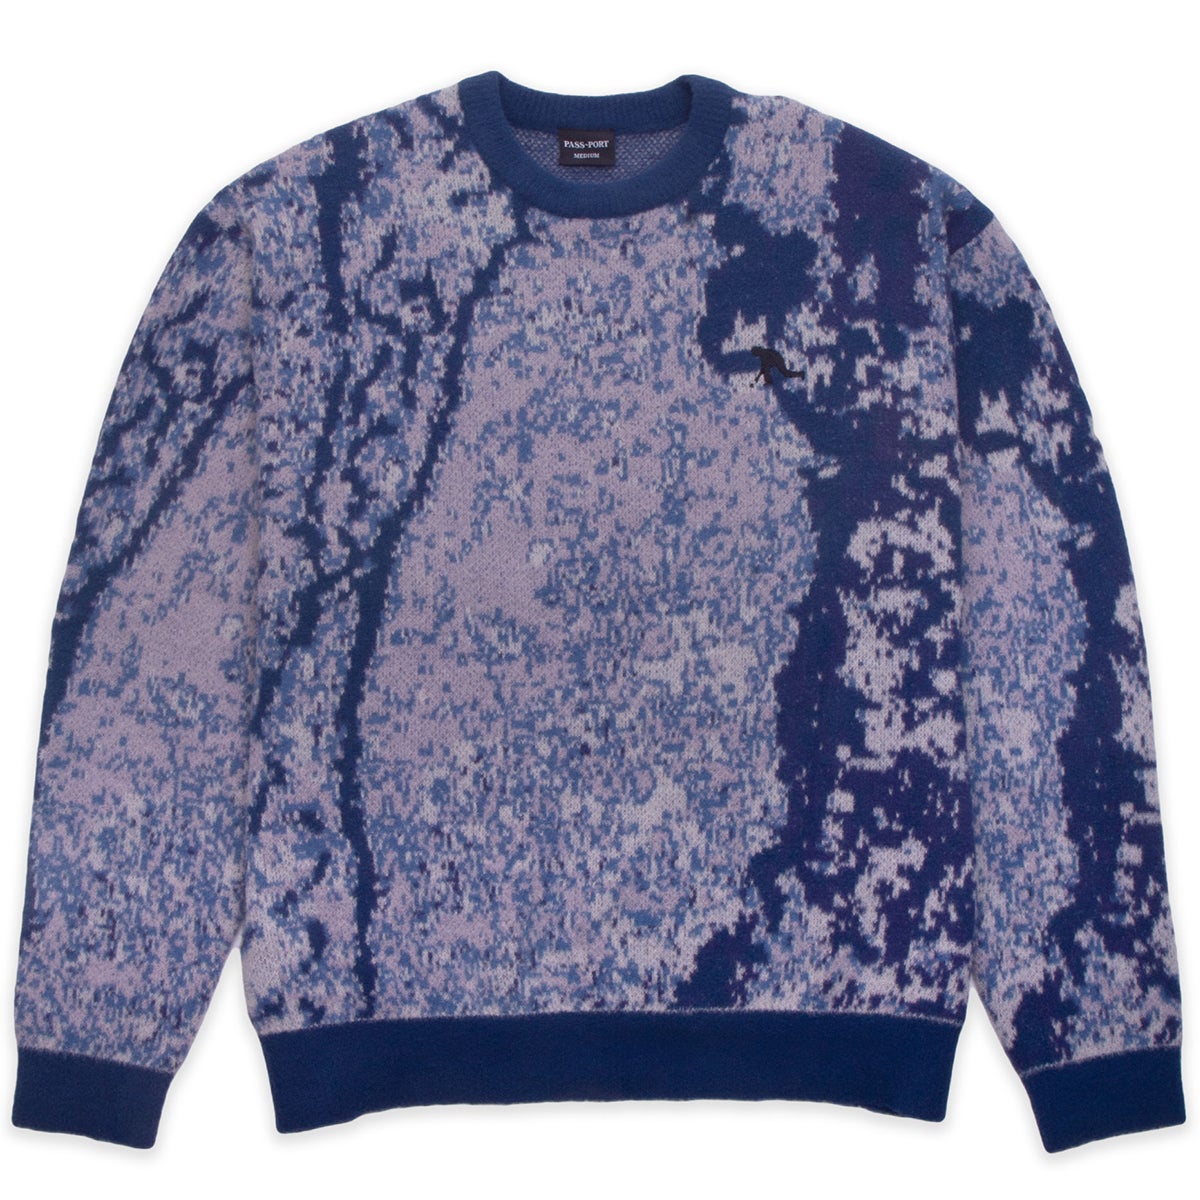 Passport Carpet Club Knit Sweater in Blue | Boardertown